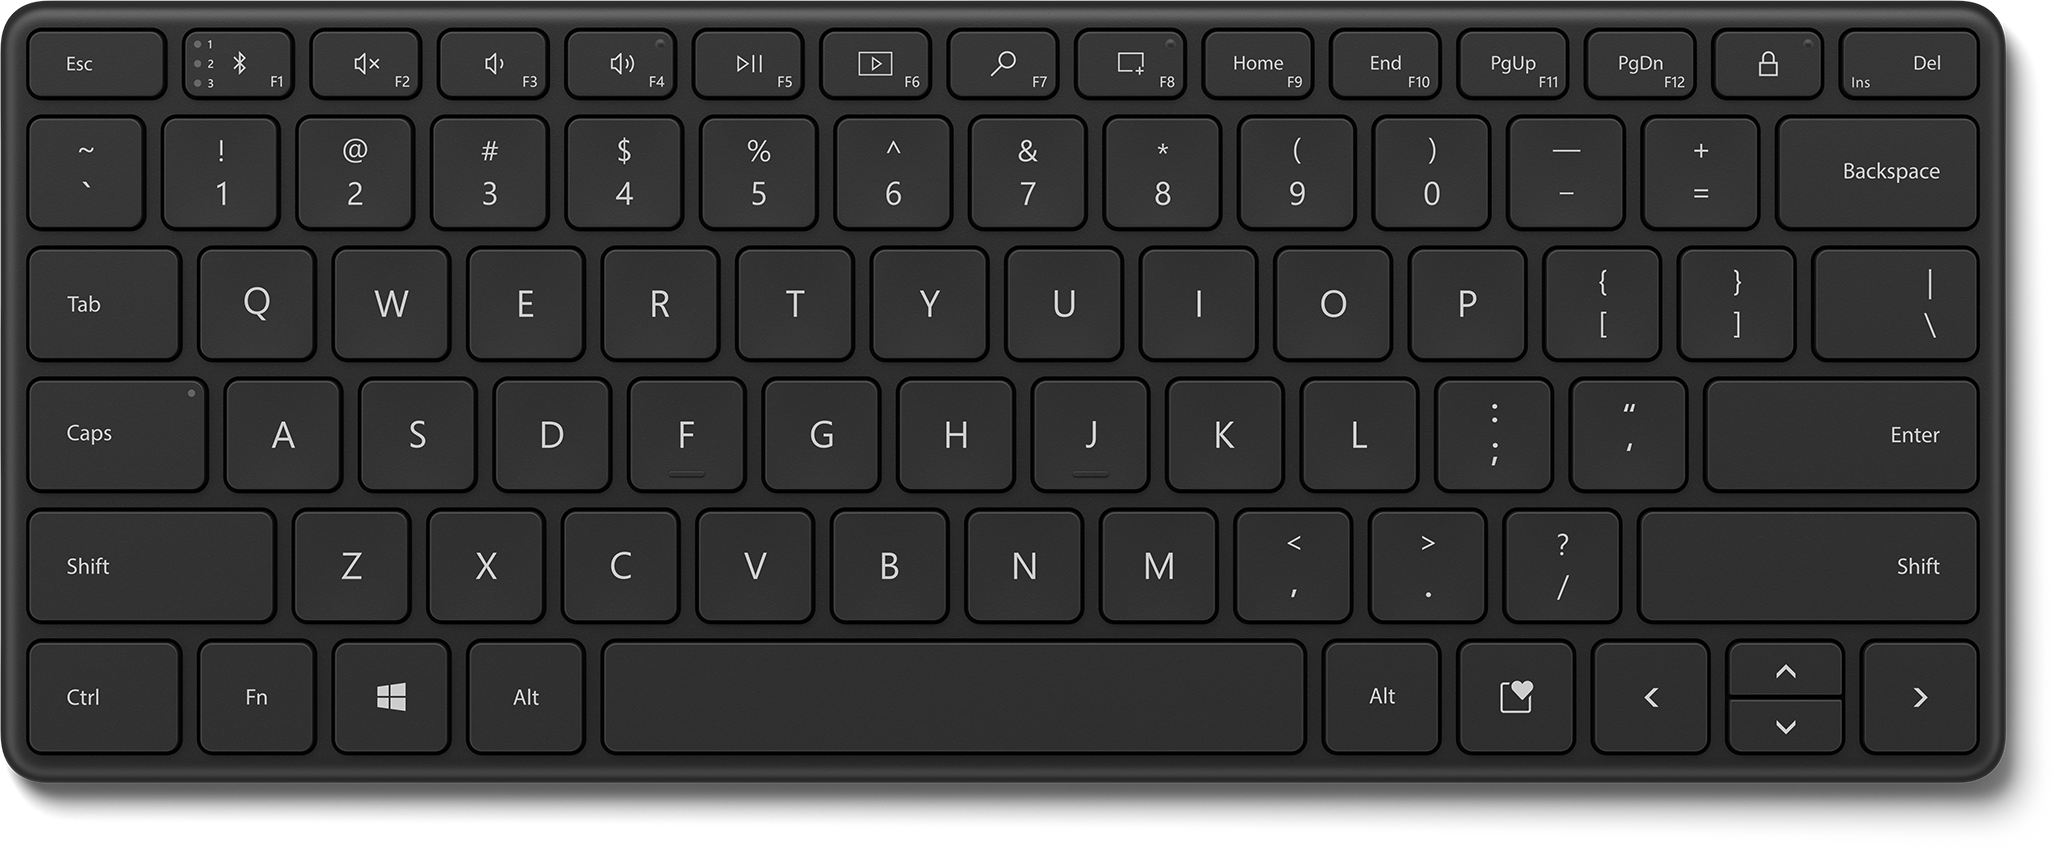 Microsoft Designer Compact Keyboard - マットブラック